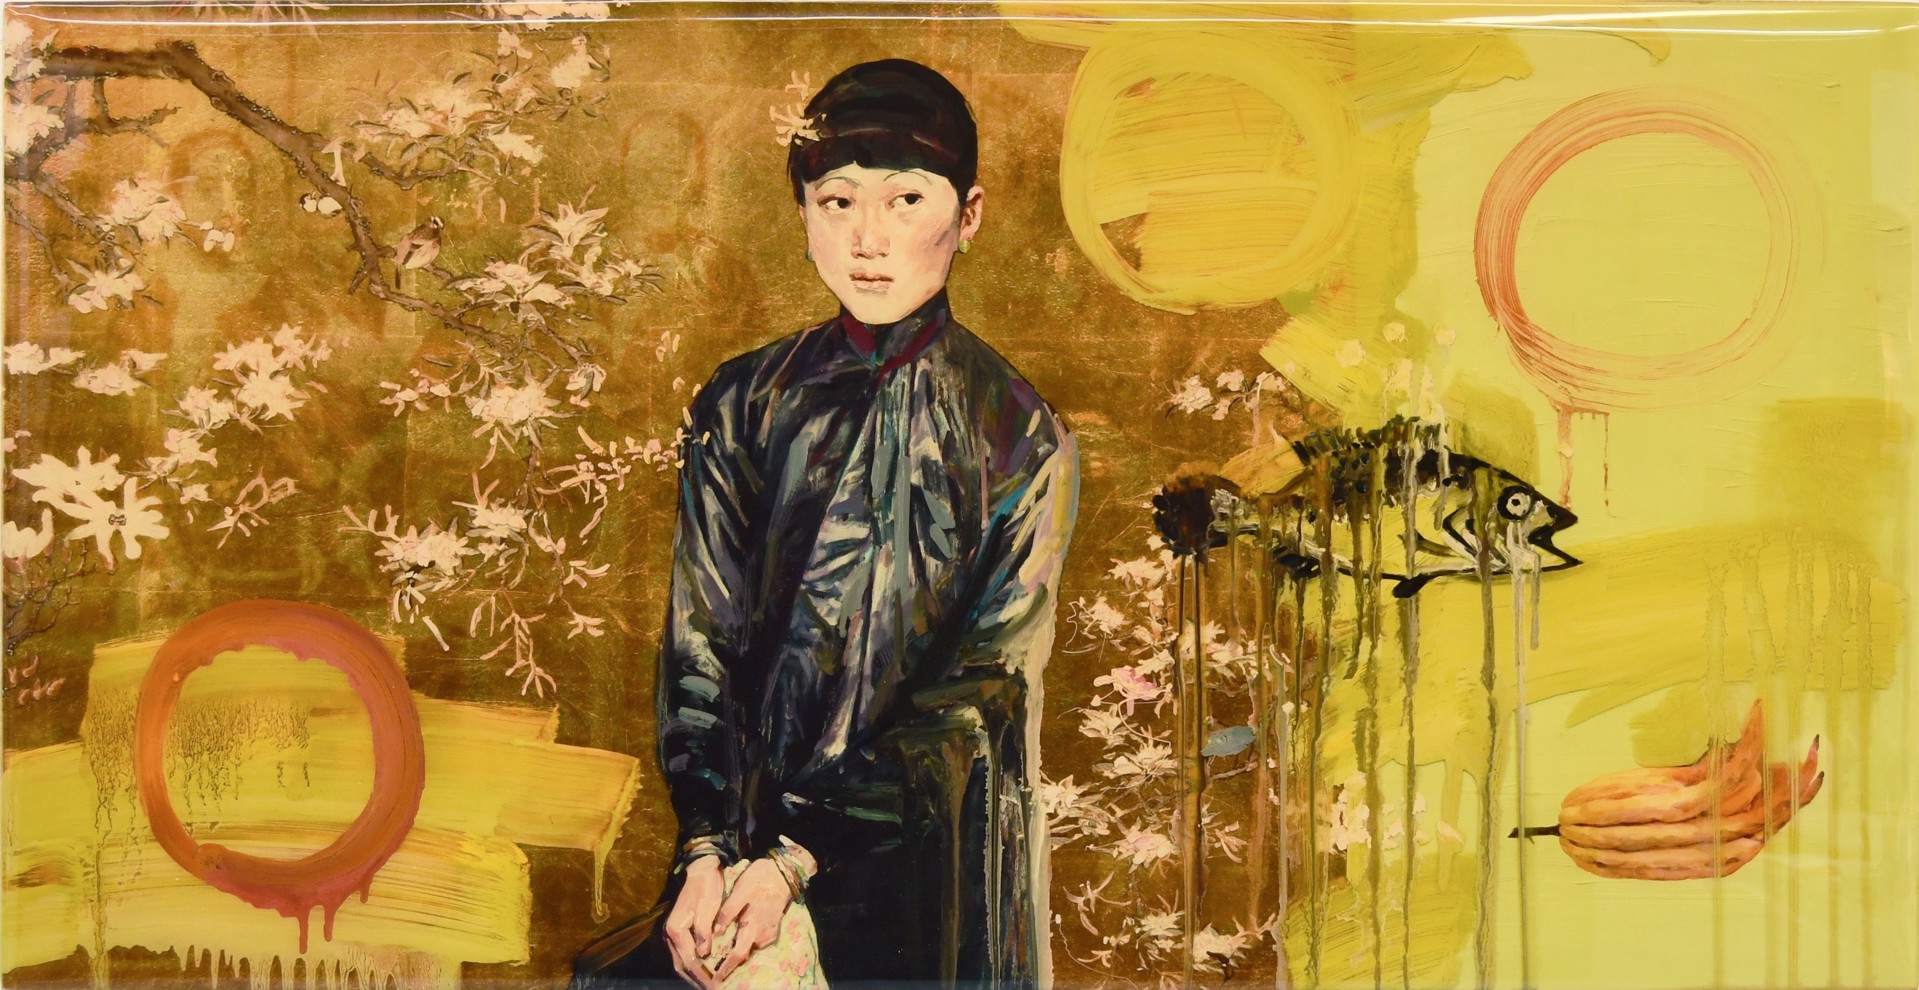 The Unknown VI (Study) by Hung Liu